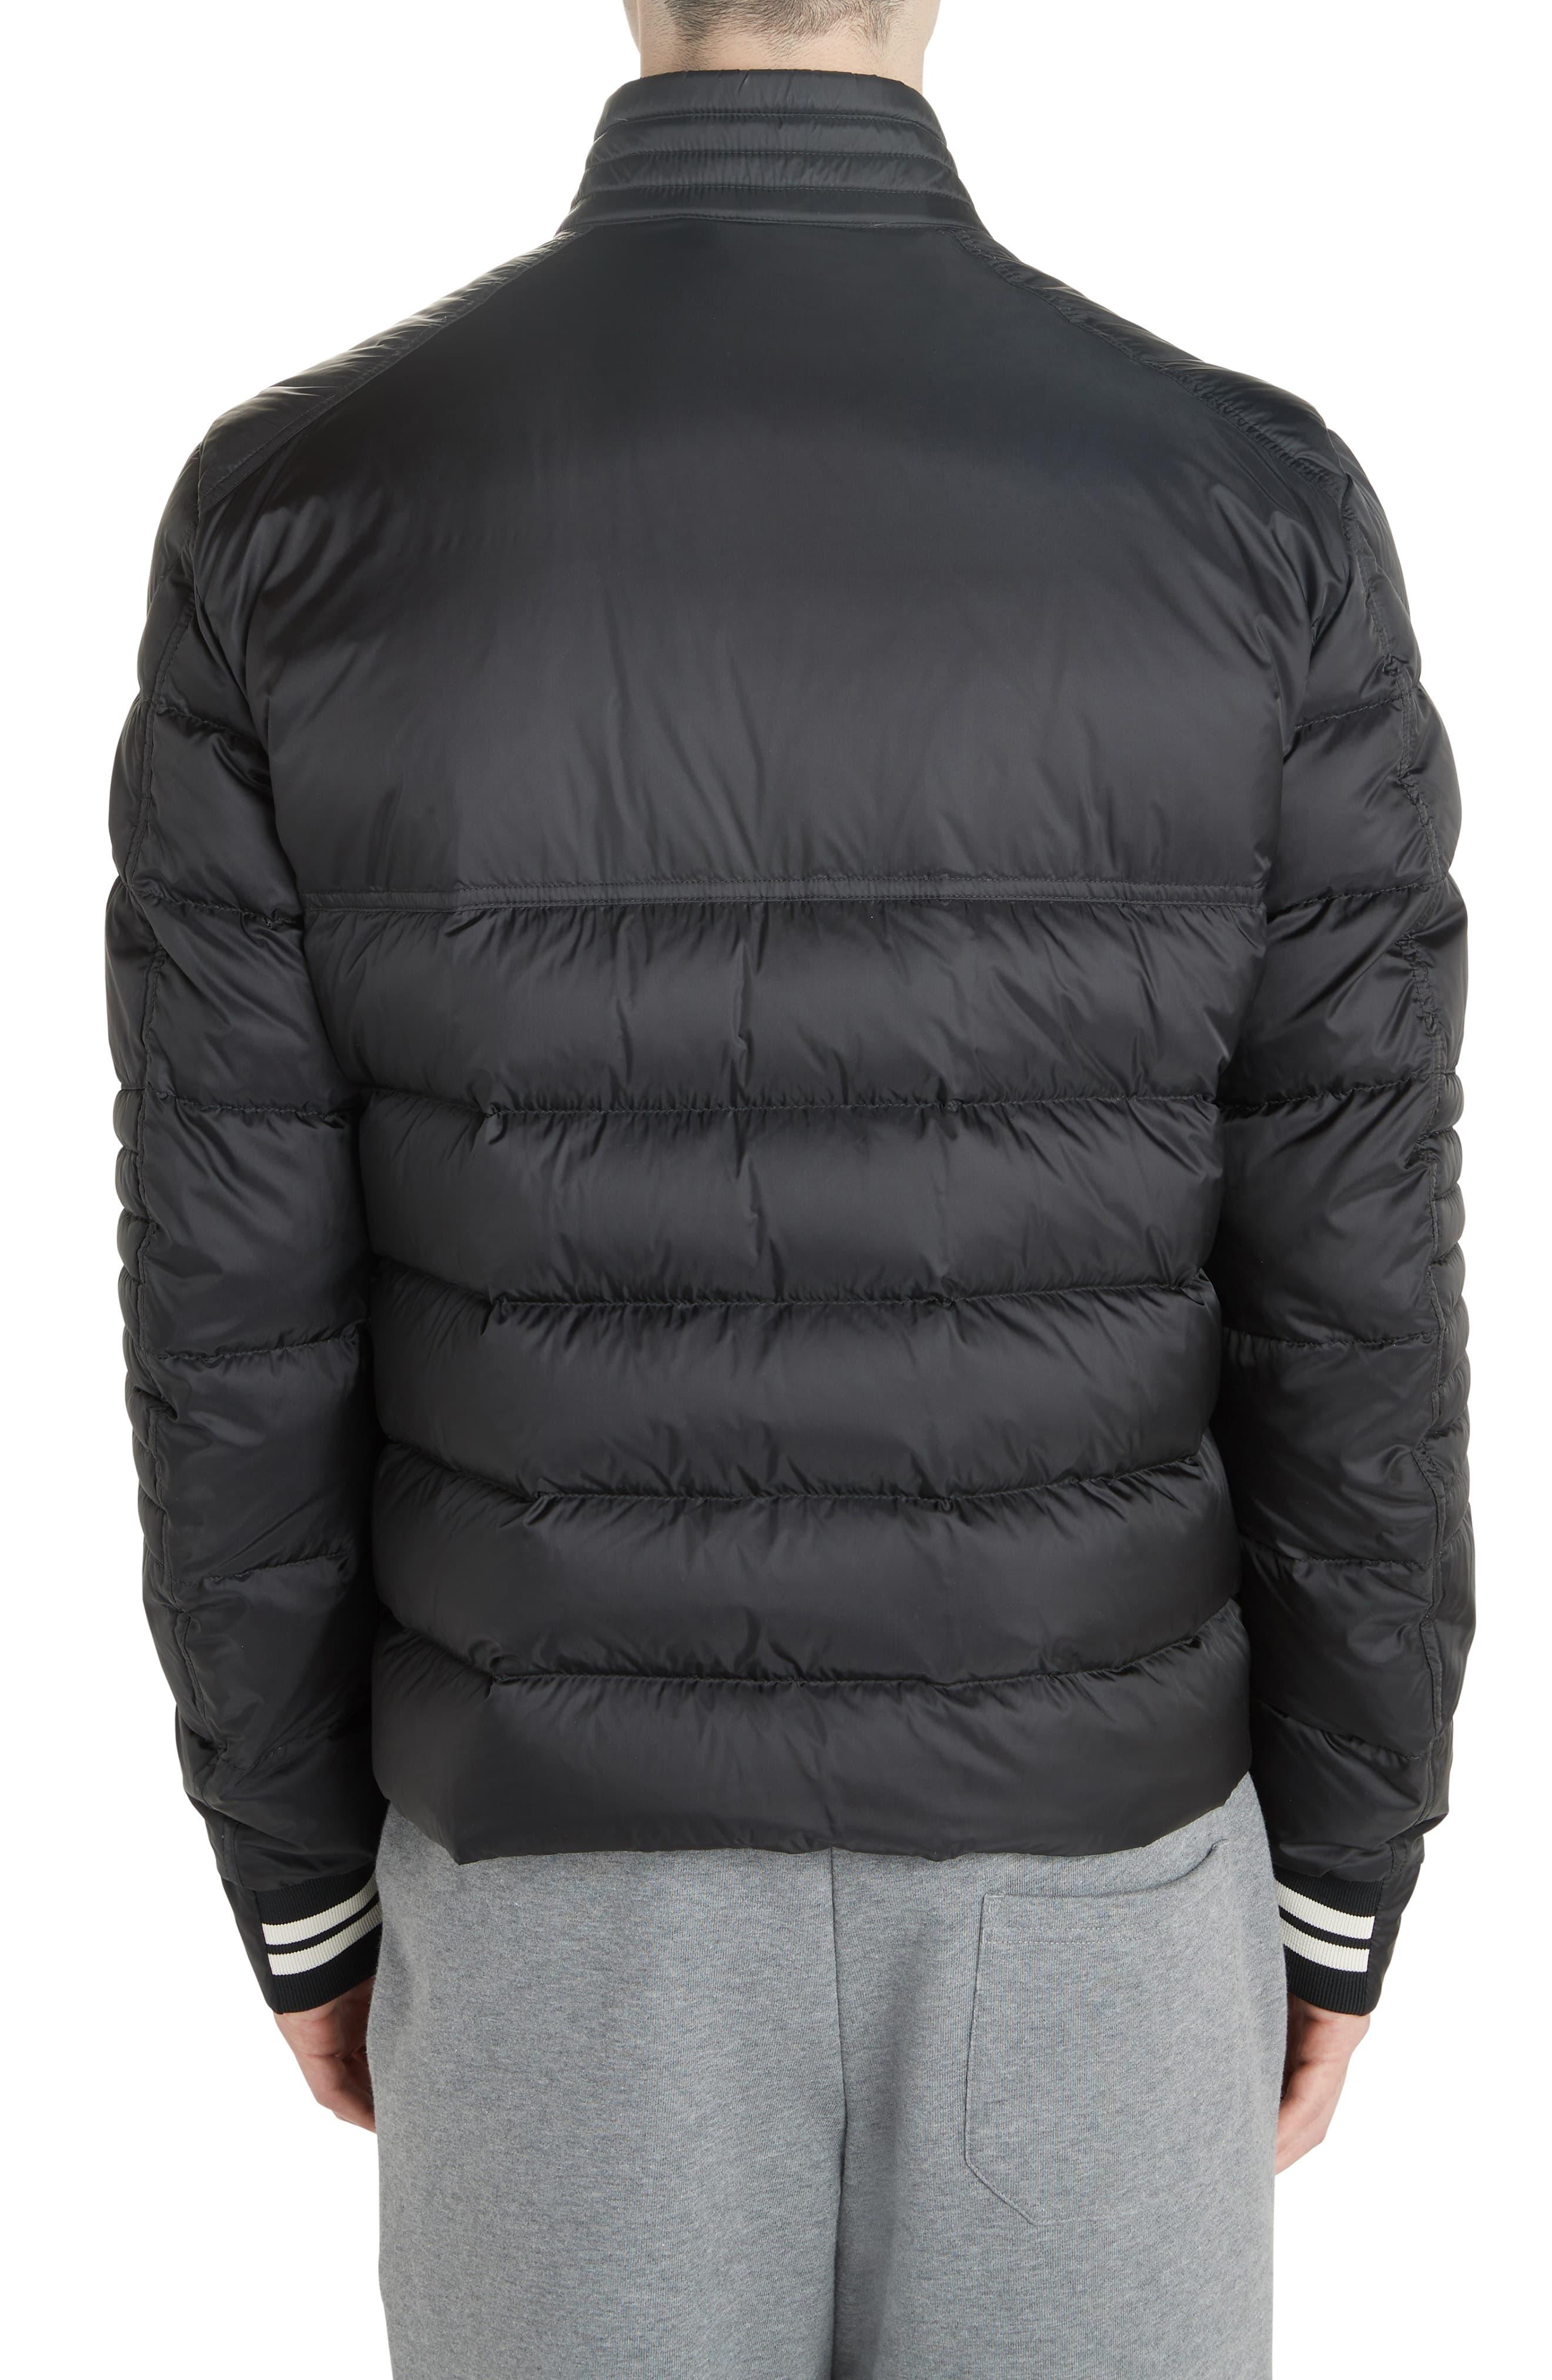 Moncler Goose Brel Down Puffer Jacket in Black for Men - Lyst